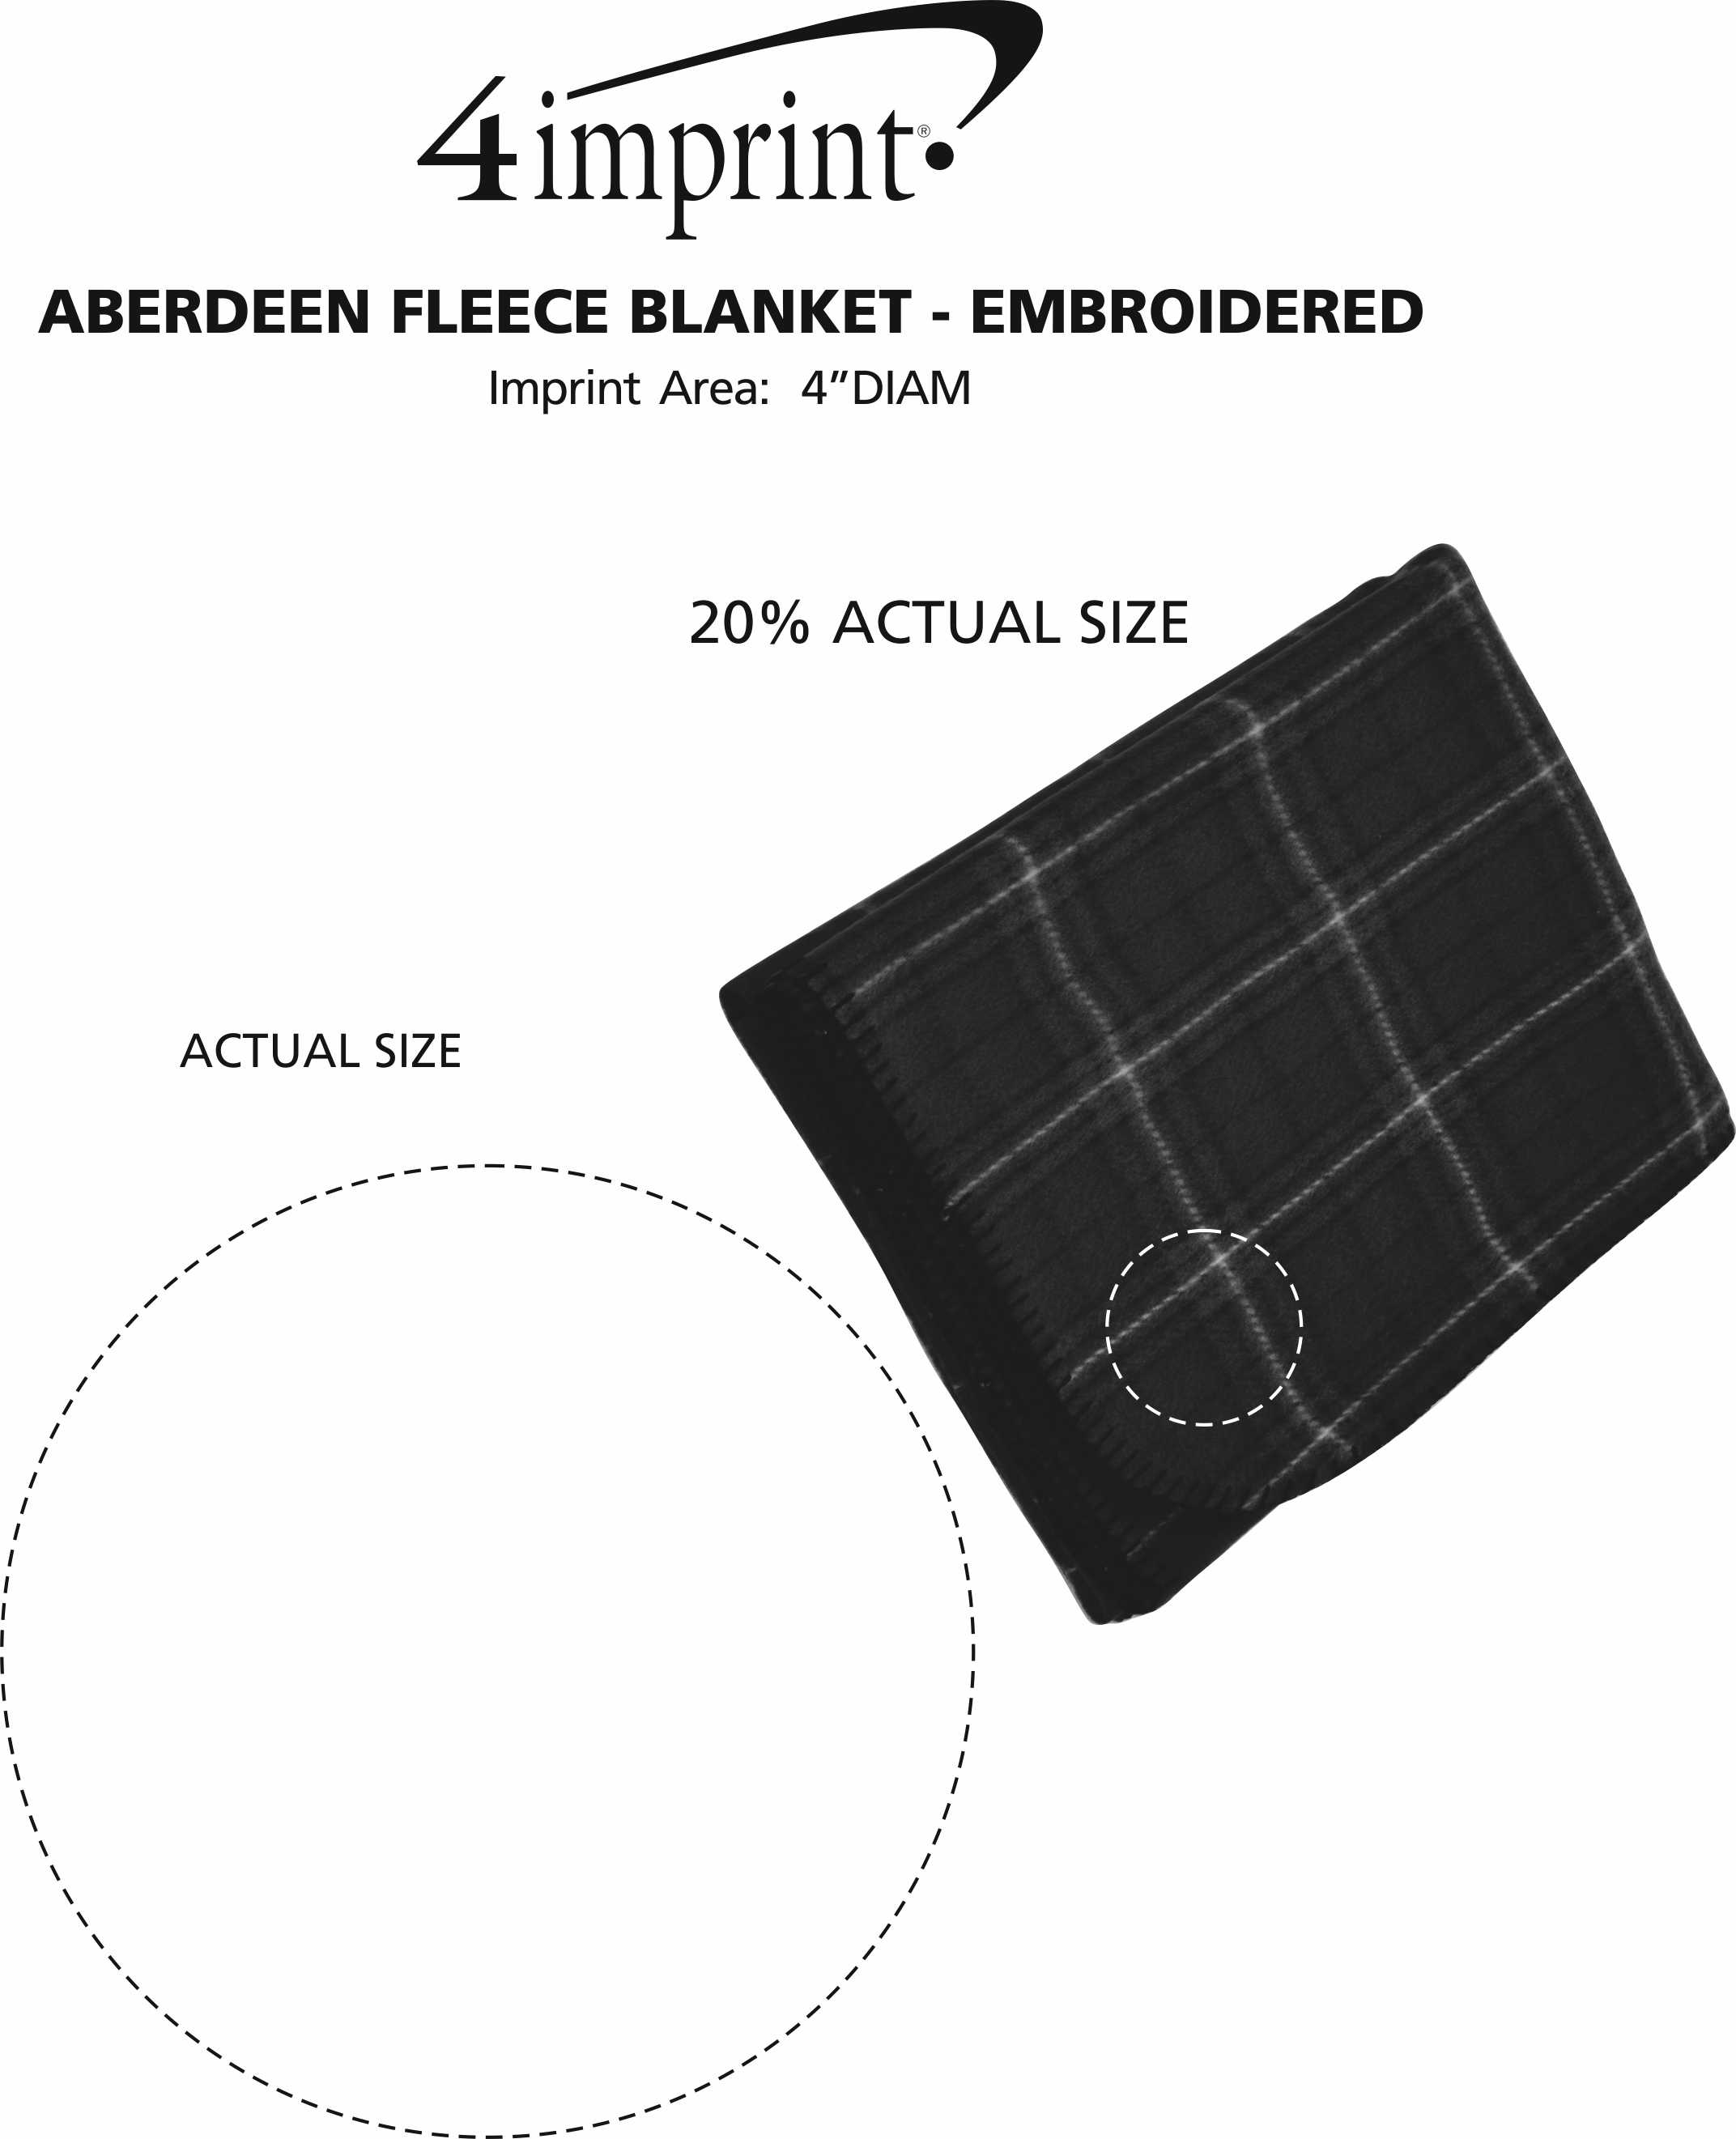 Imprint Area of Aberdeen Fleece Blanket - Embroidered